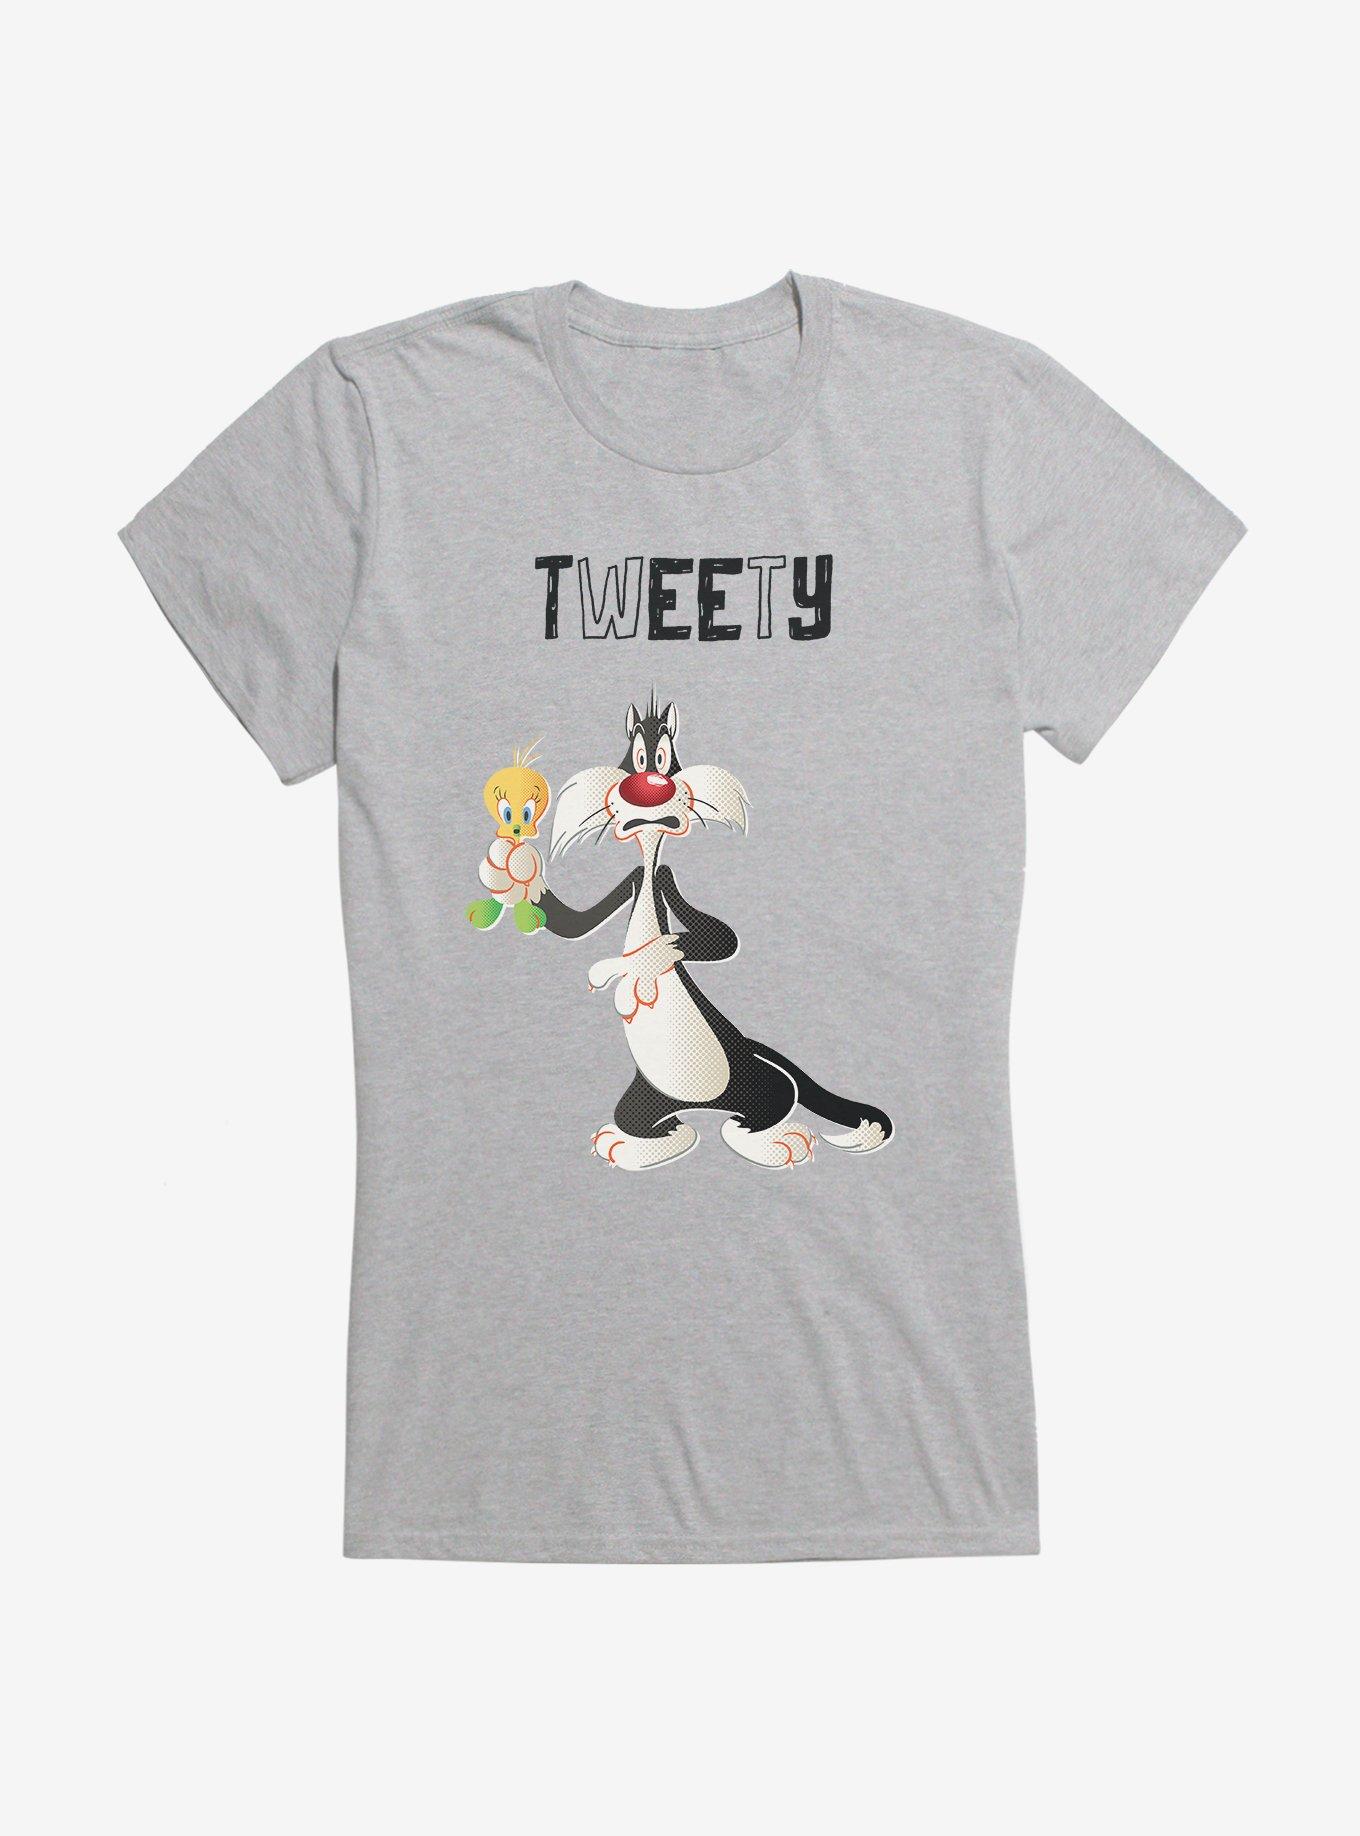 Looney Tunes Sylvester Catching Tweety Girls T-Shirt